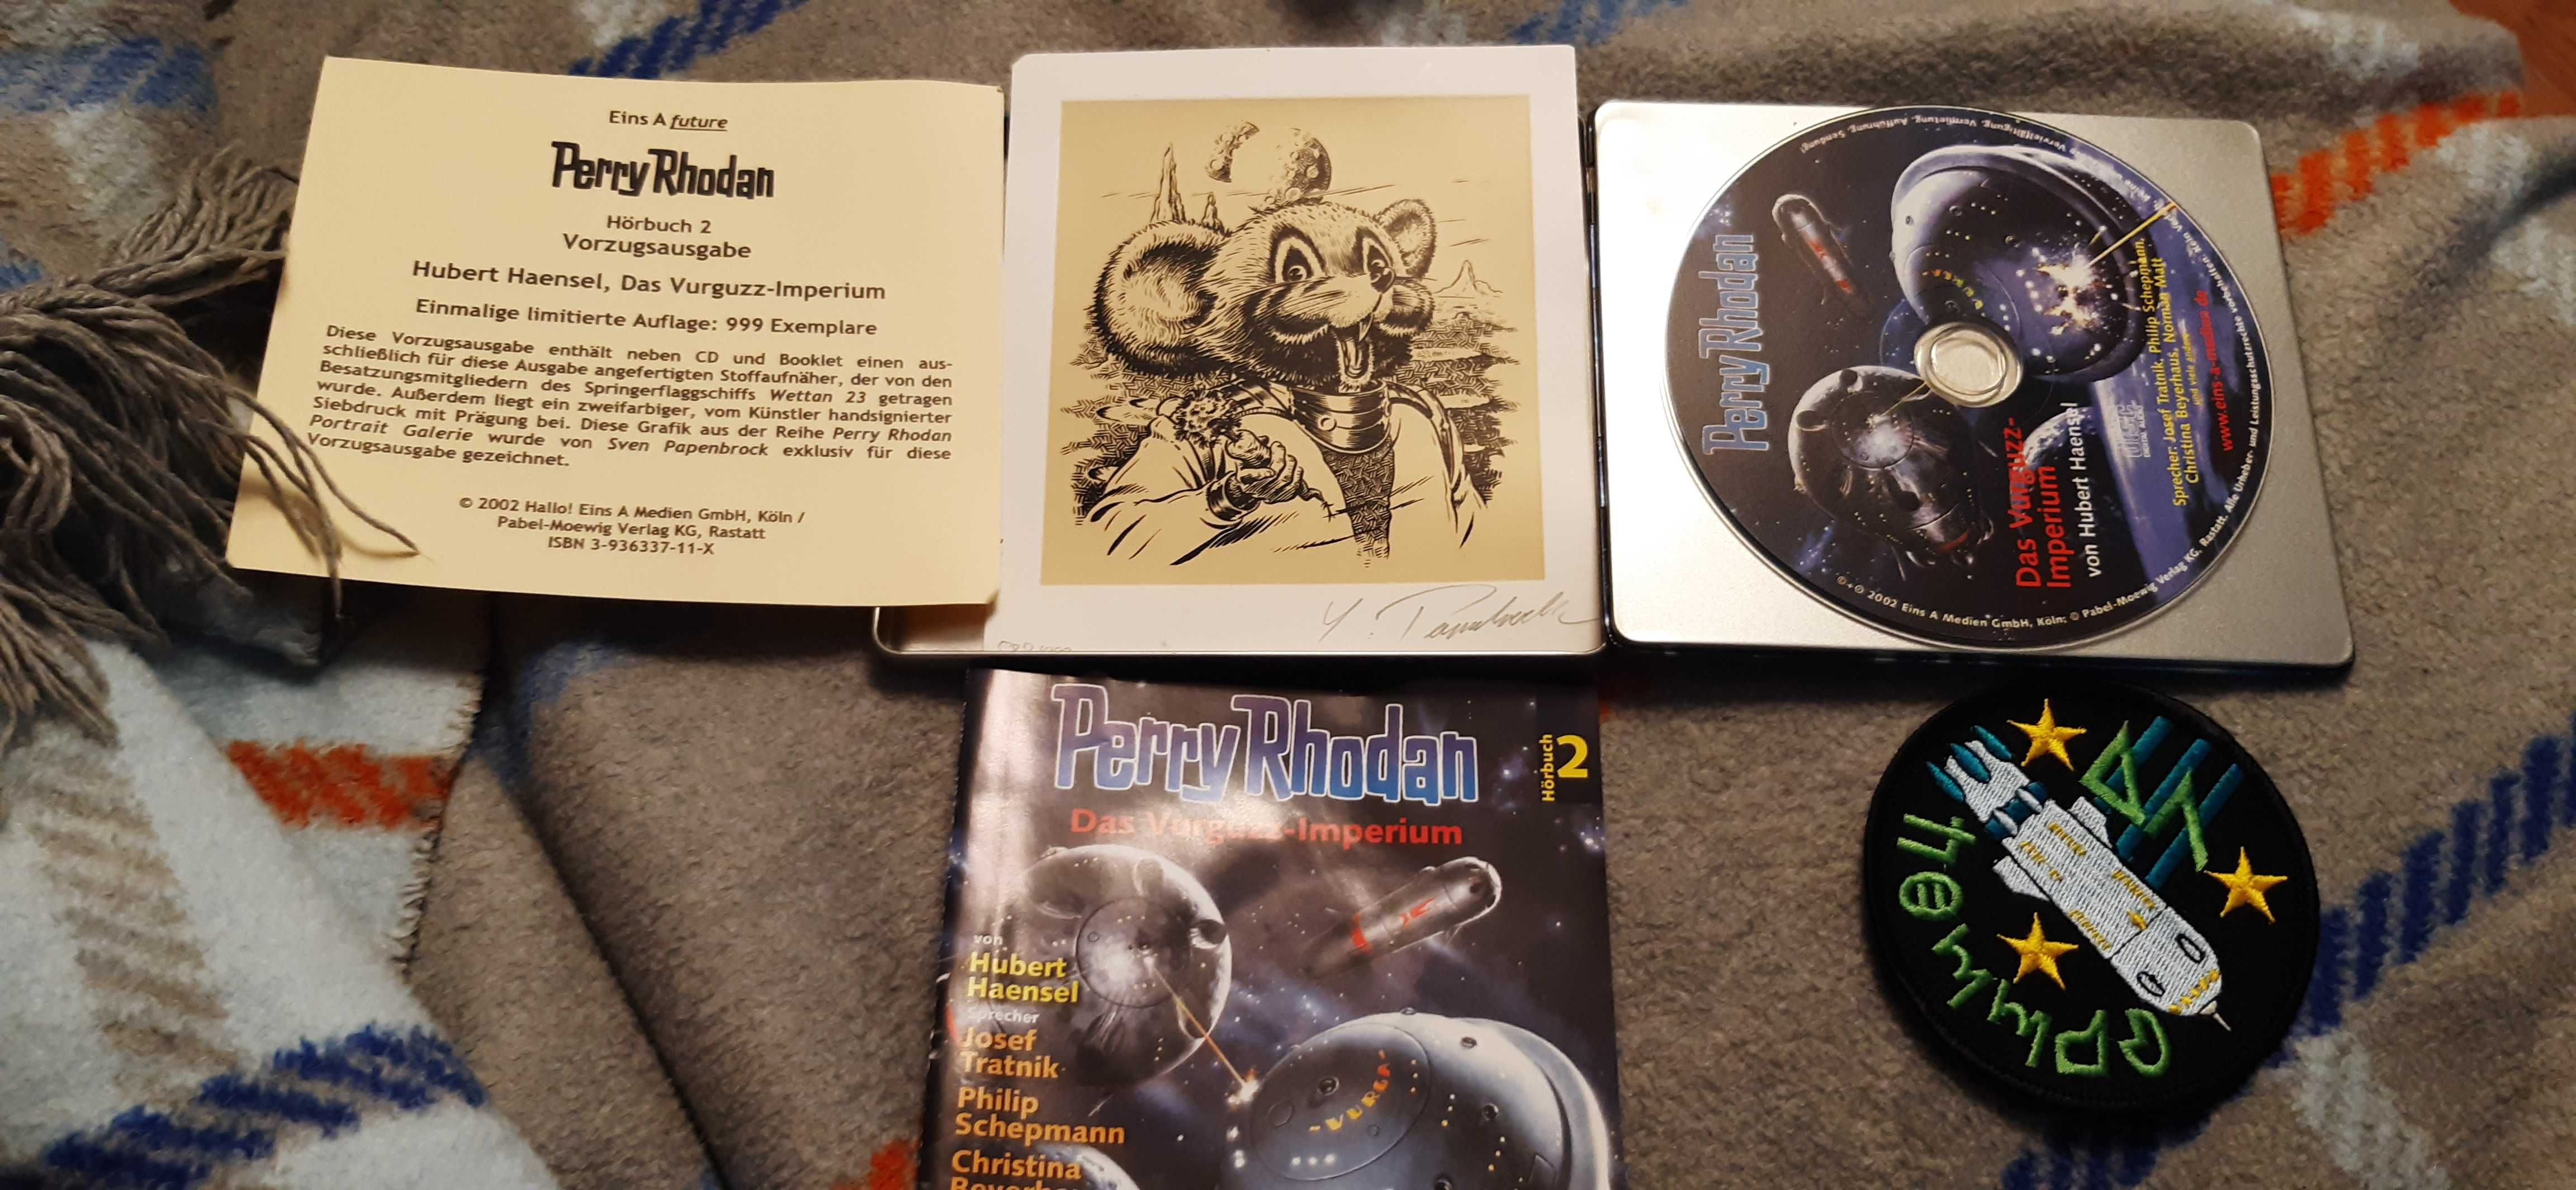 płyta cd perry rhodan plus dodatki naszywka arty steelbook